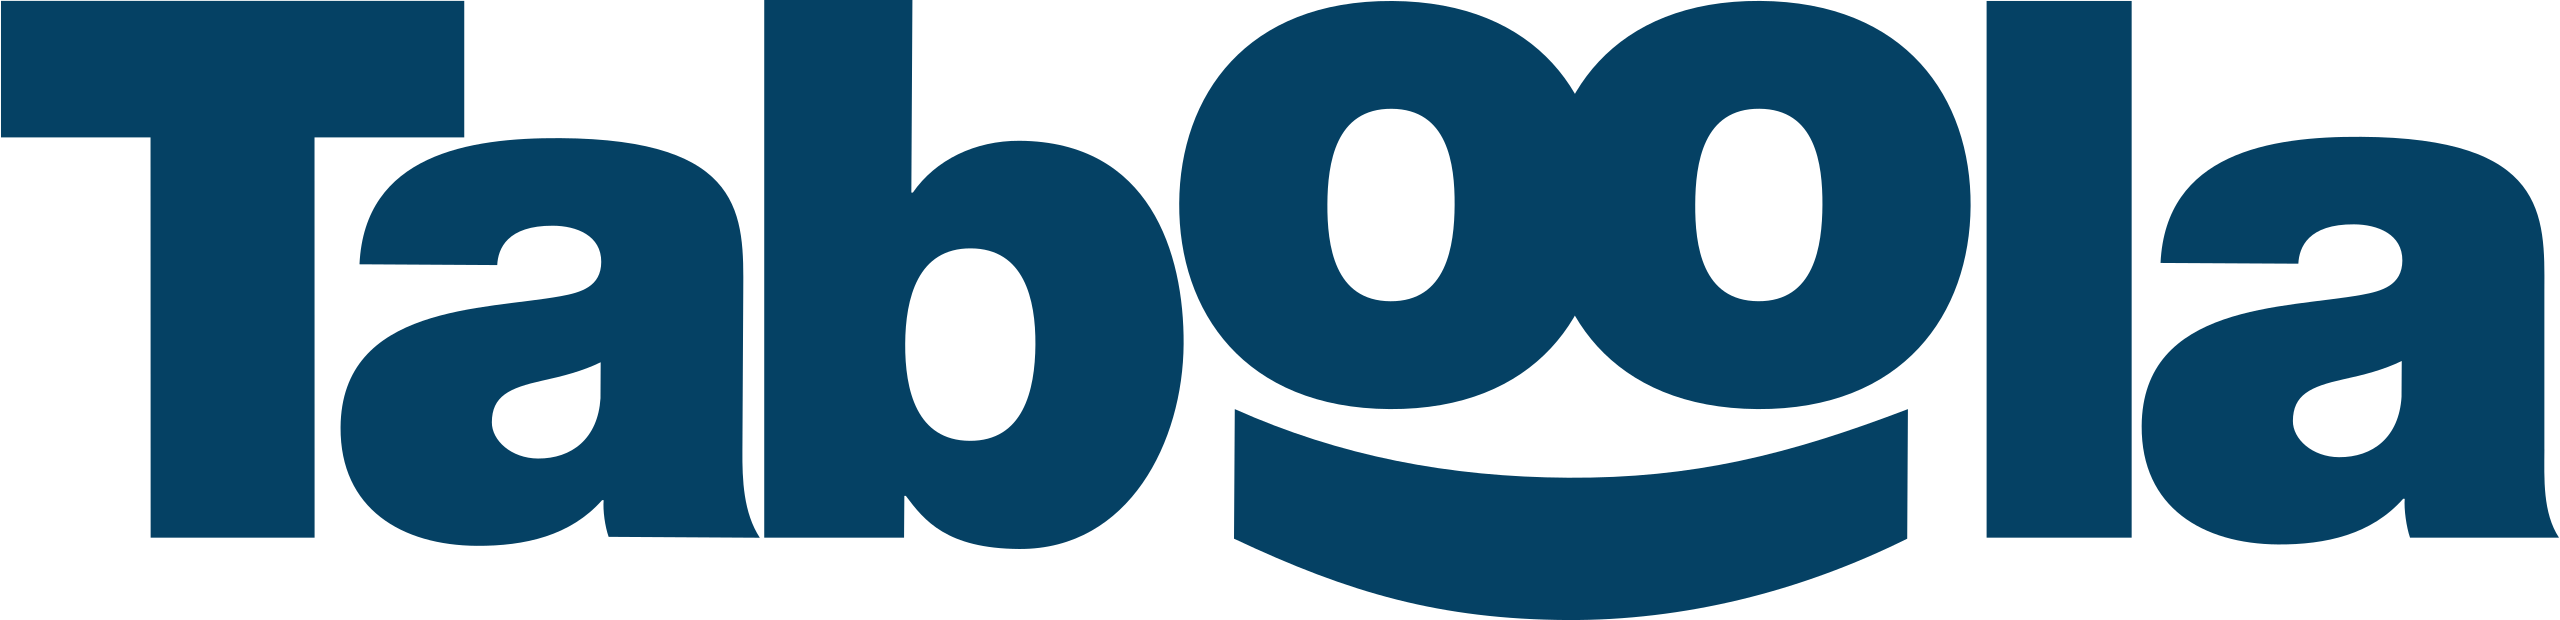 Taboola_logo.svg